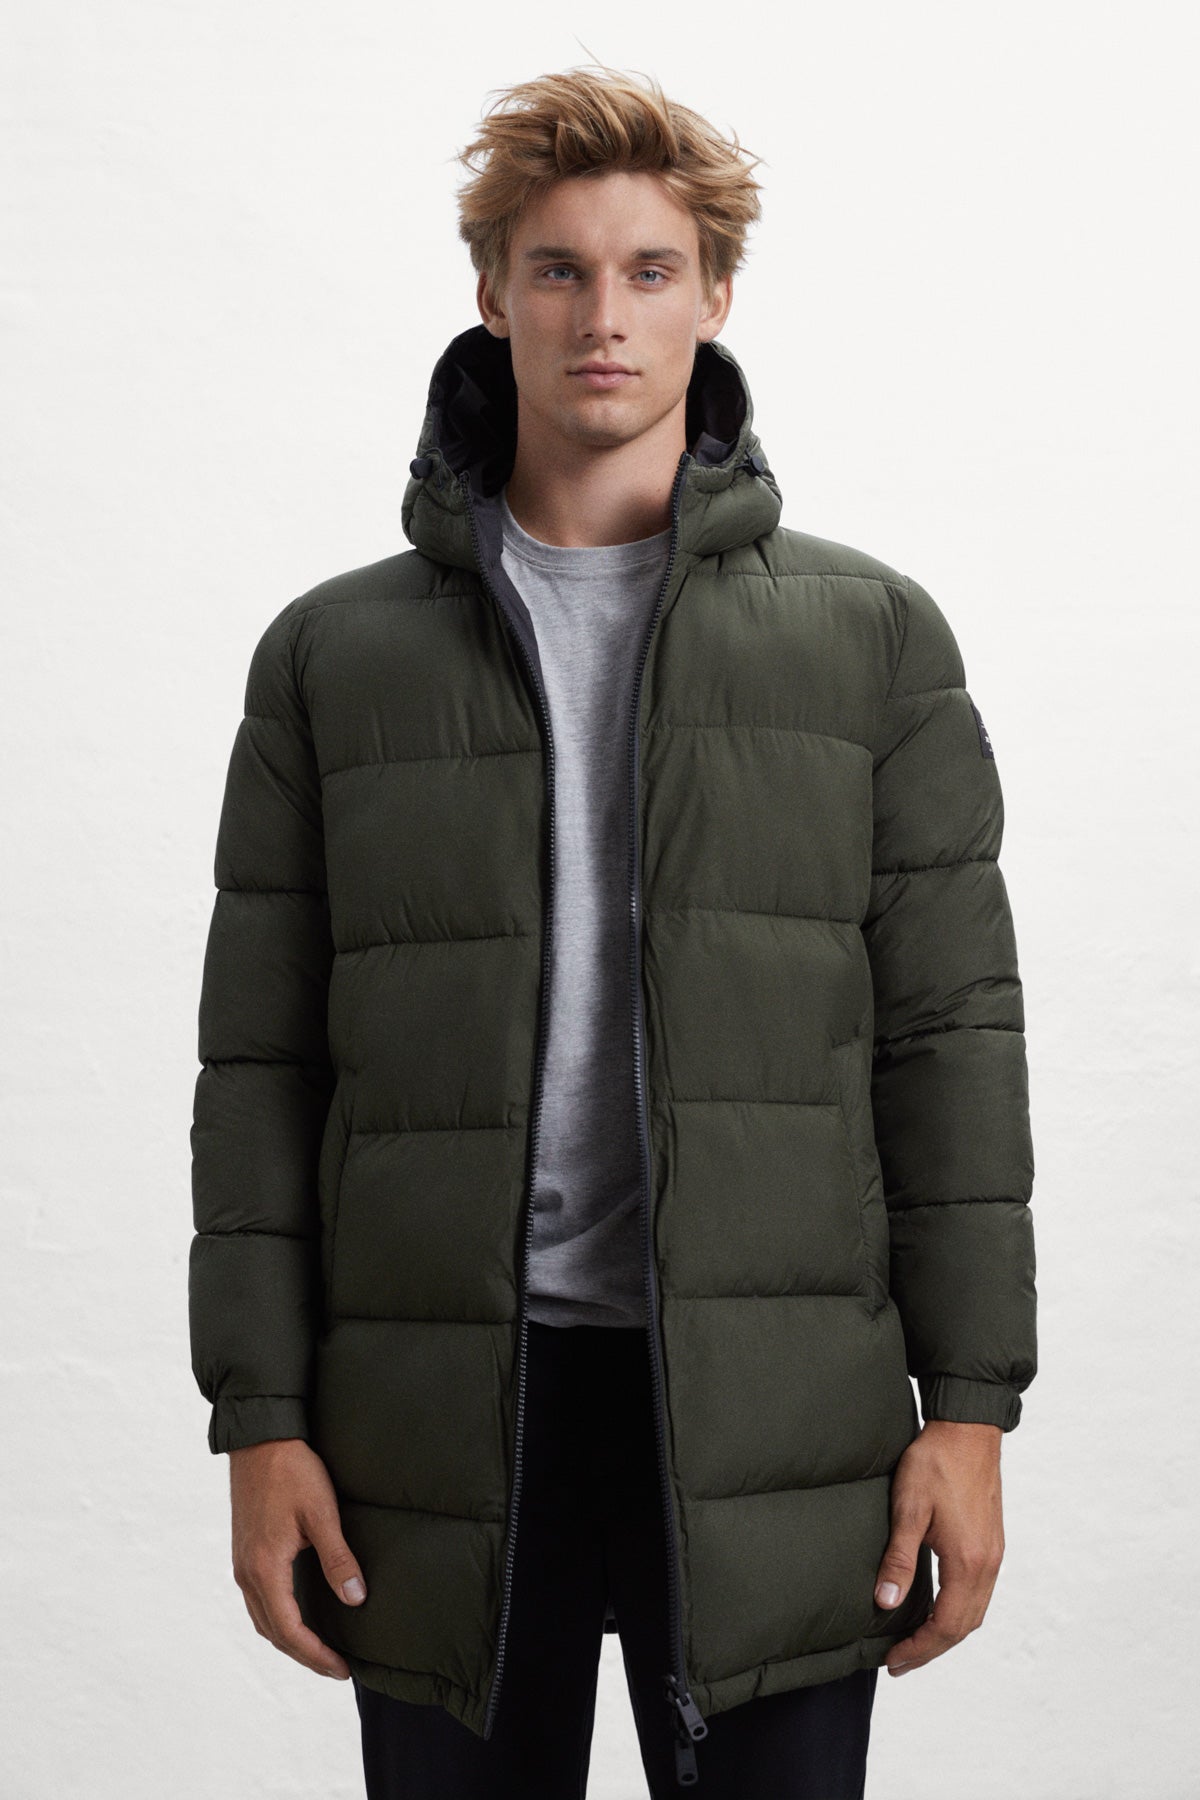 Comprar chaquetas de hombre online | ECOALF